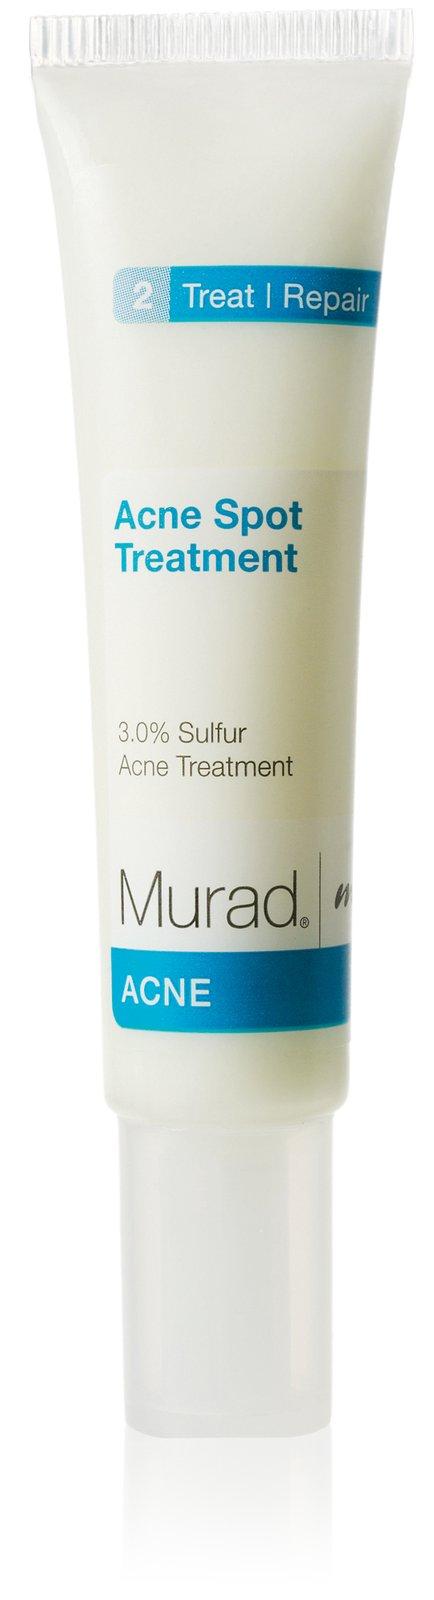 Murad Acne Spot Treatment-0.5oz.